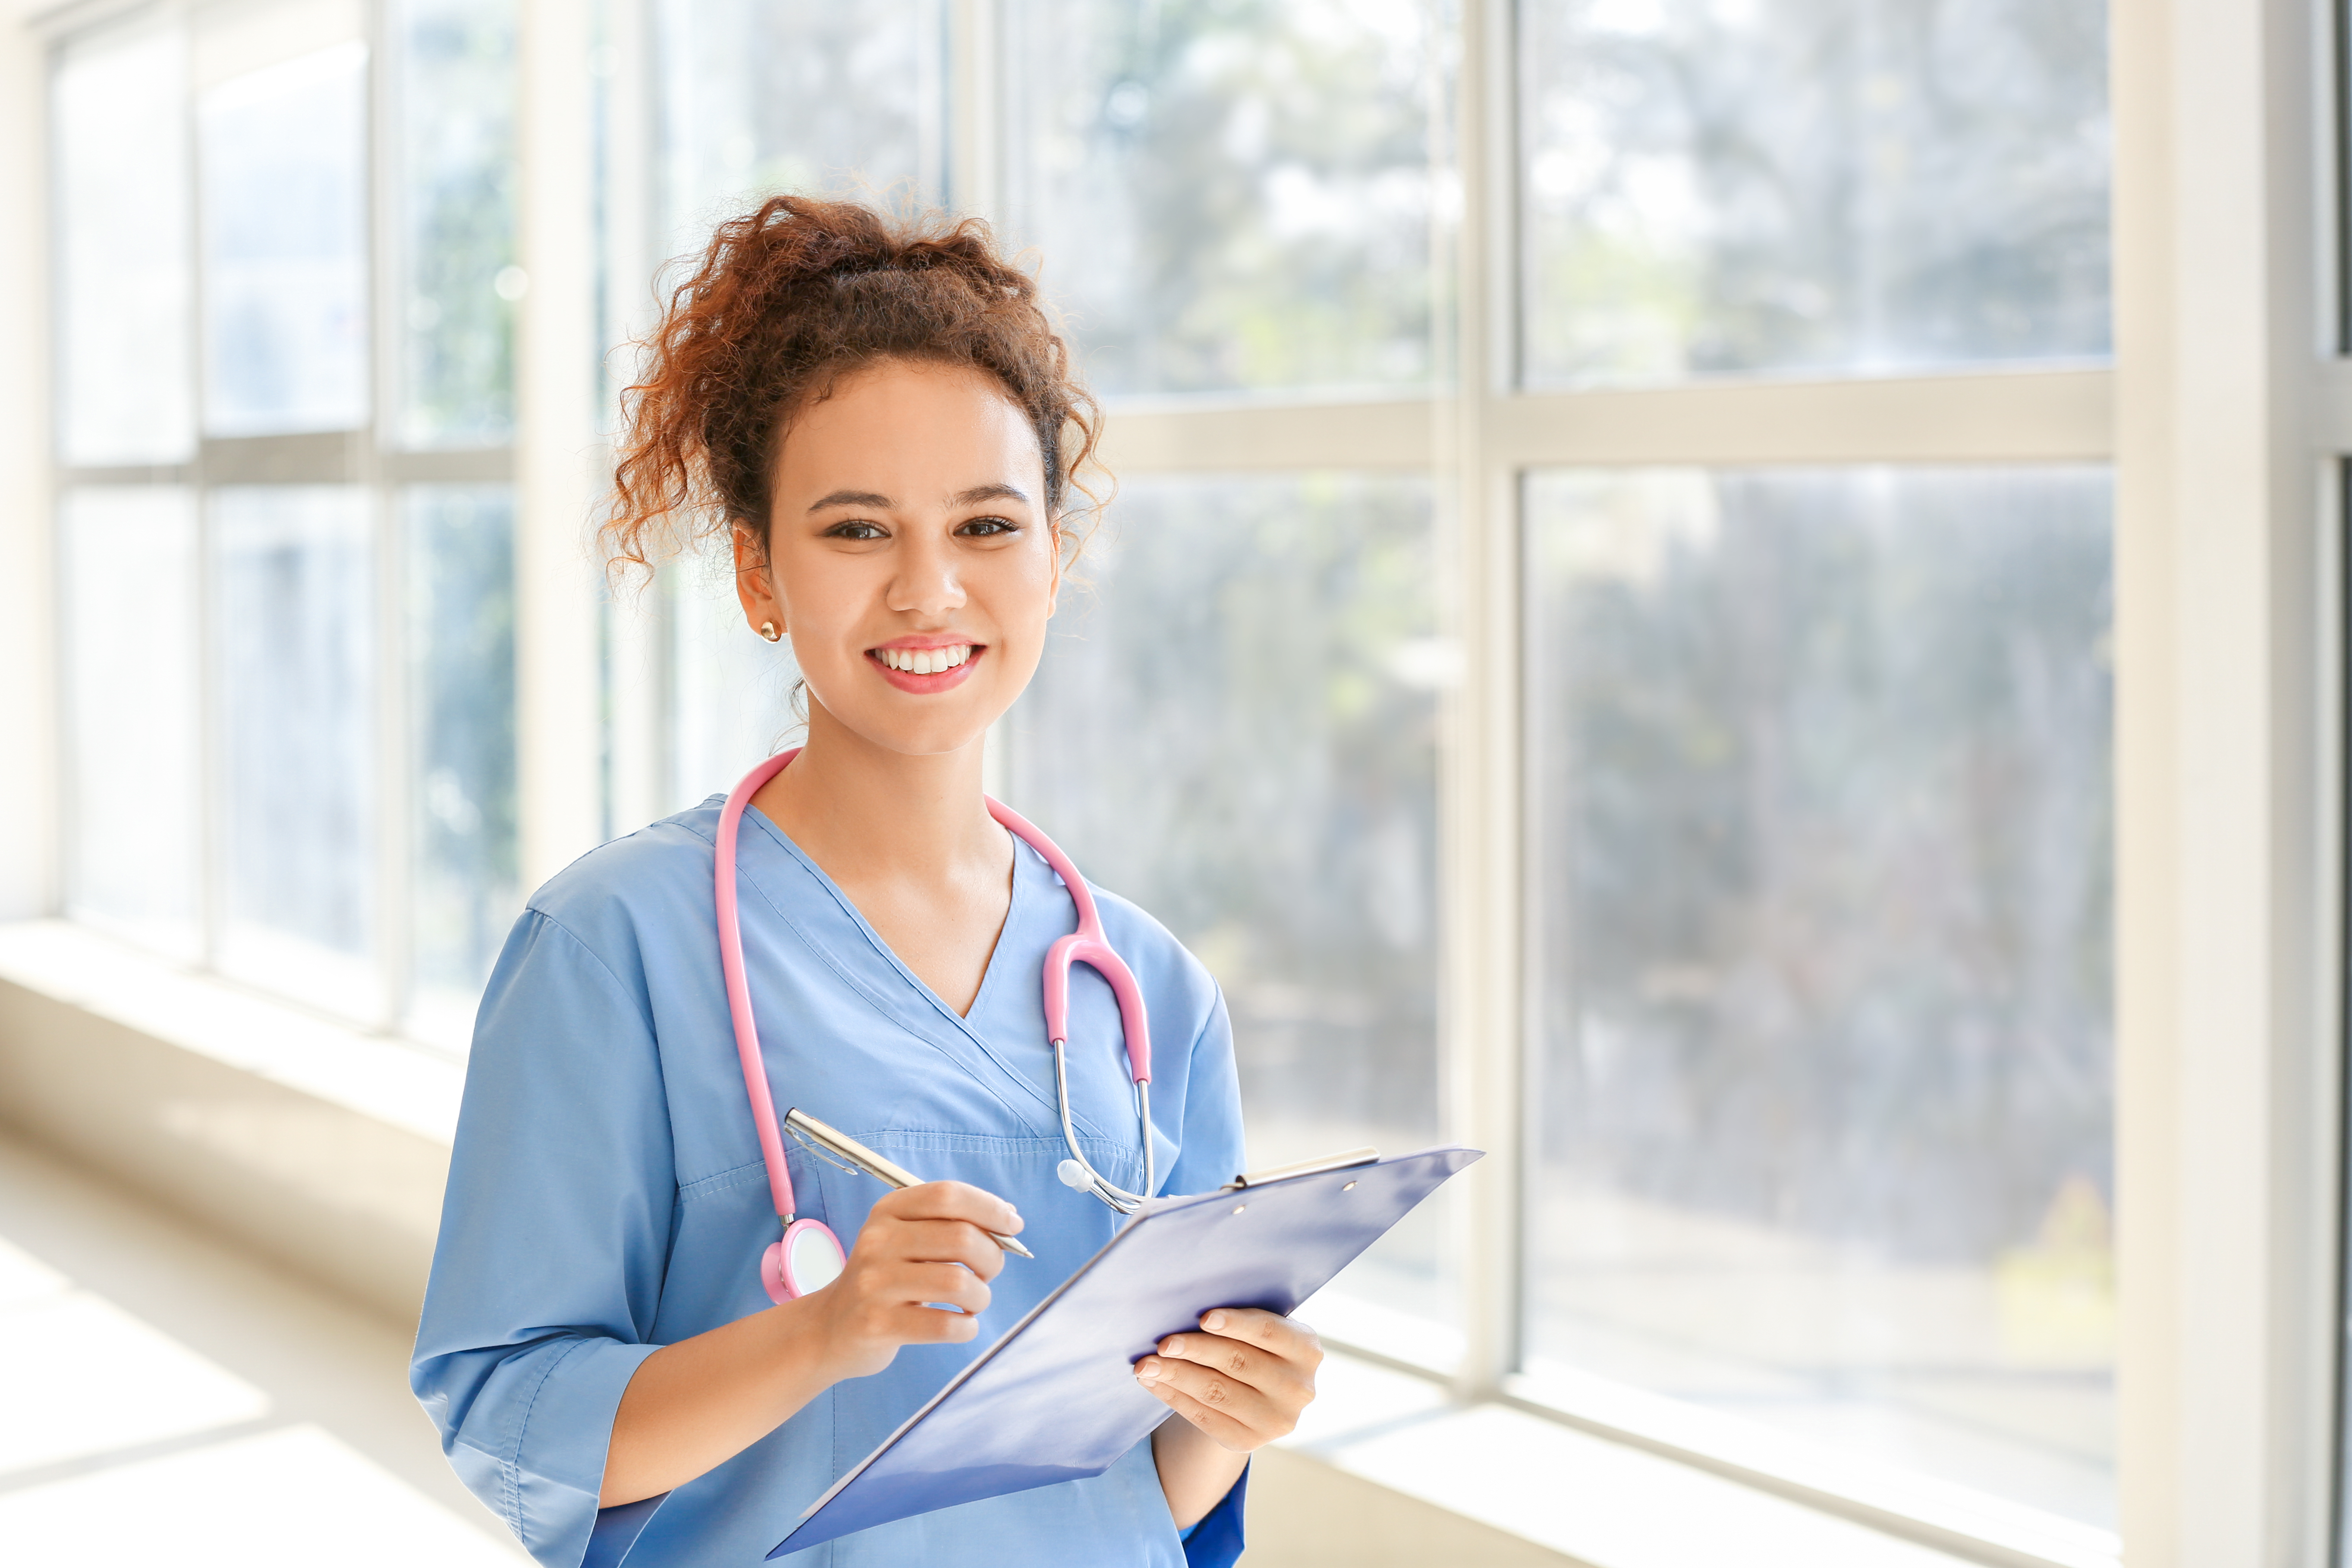 Une jeune infirmière souriante | Source : Shutterstock